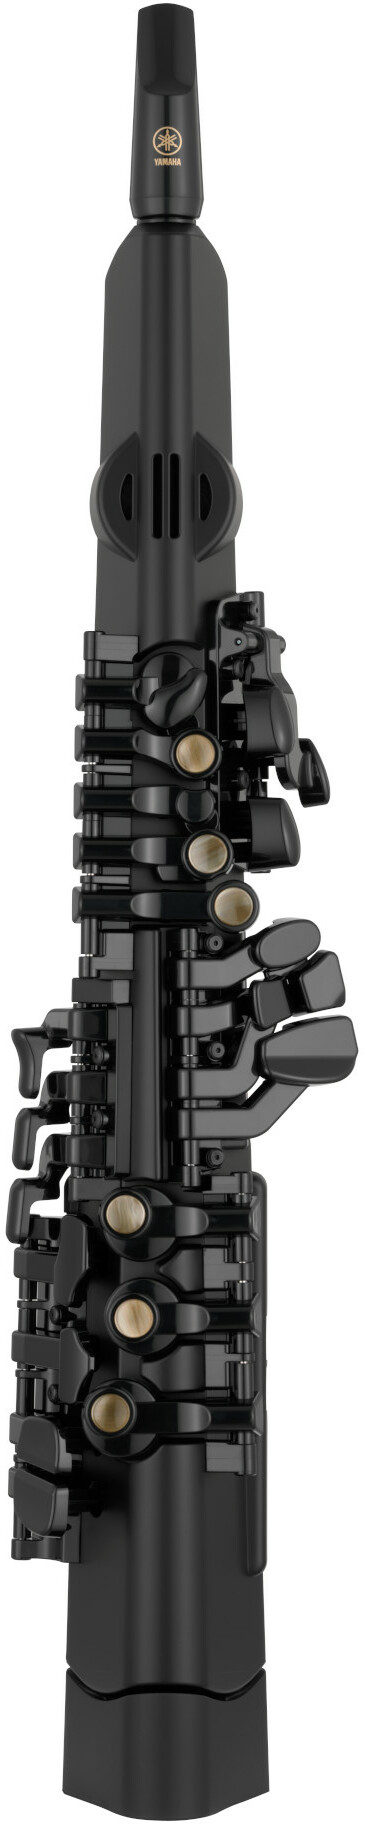 Yamaha Yds-120 Digital Saxophone - Electronic Wind Instrument - Main picture